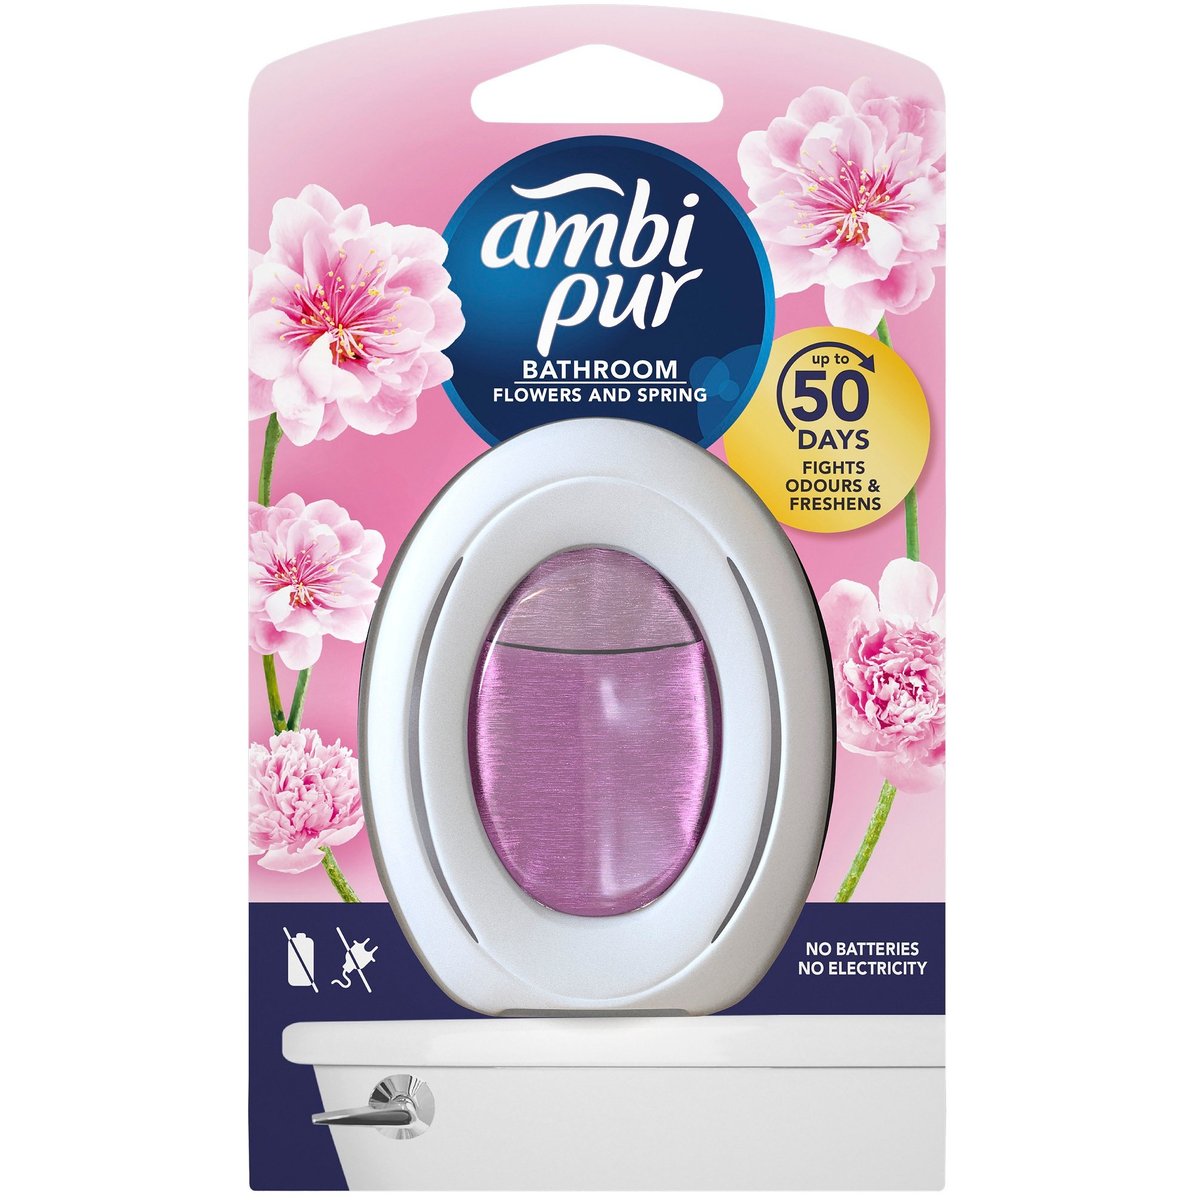 Ambi Pur Bathroom Flowers & Spring osvěžovač vzduchu